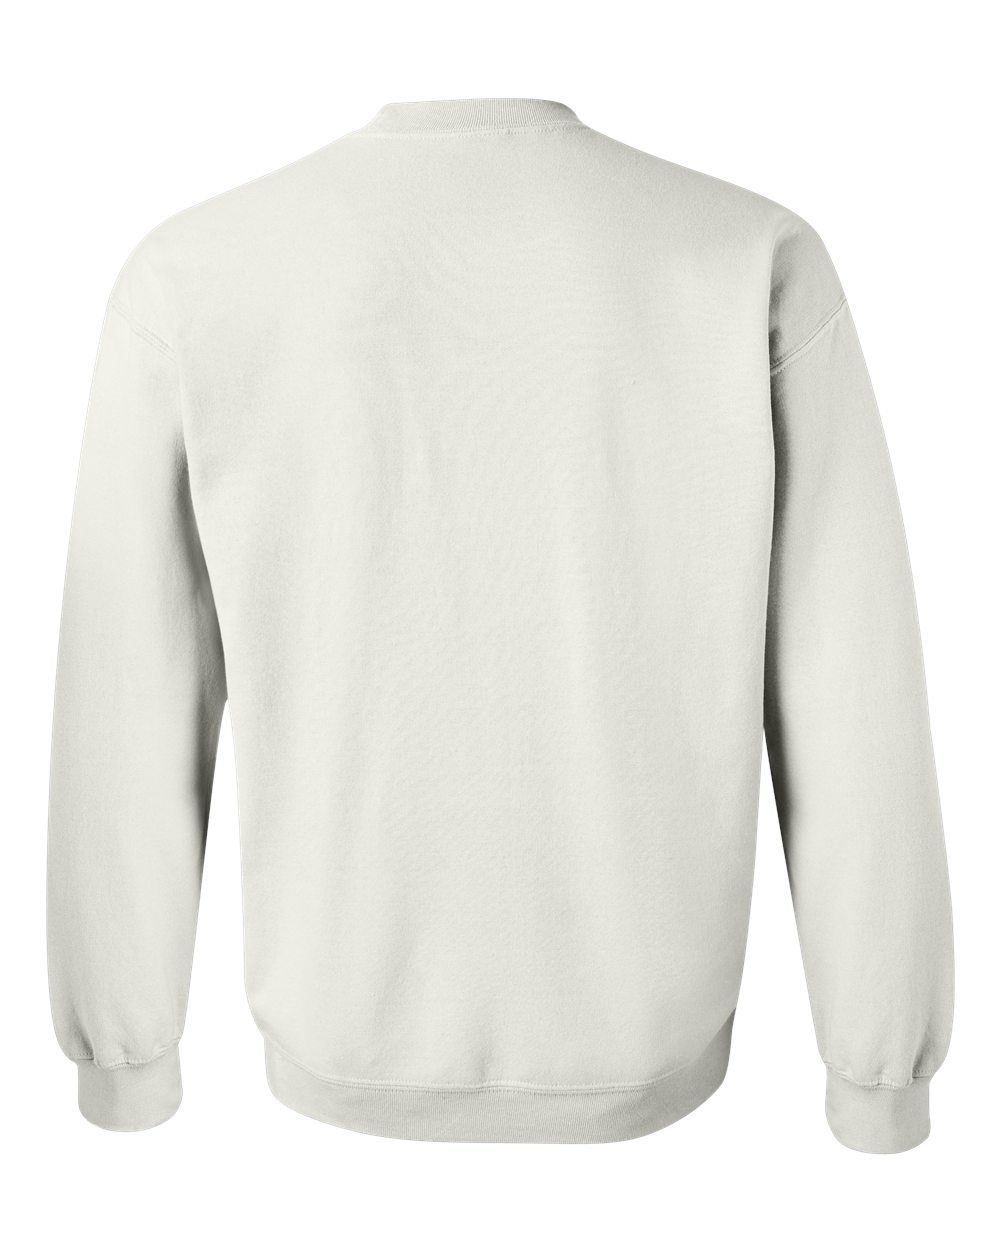 Heavy Blend™ Crewneck Sweatshirt - Gildan 18000 | Clothing Shop Online